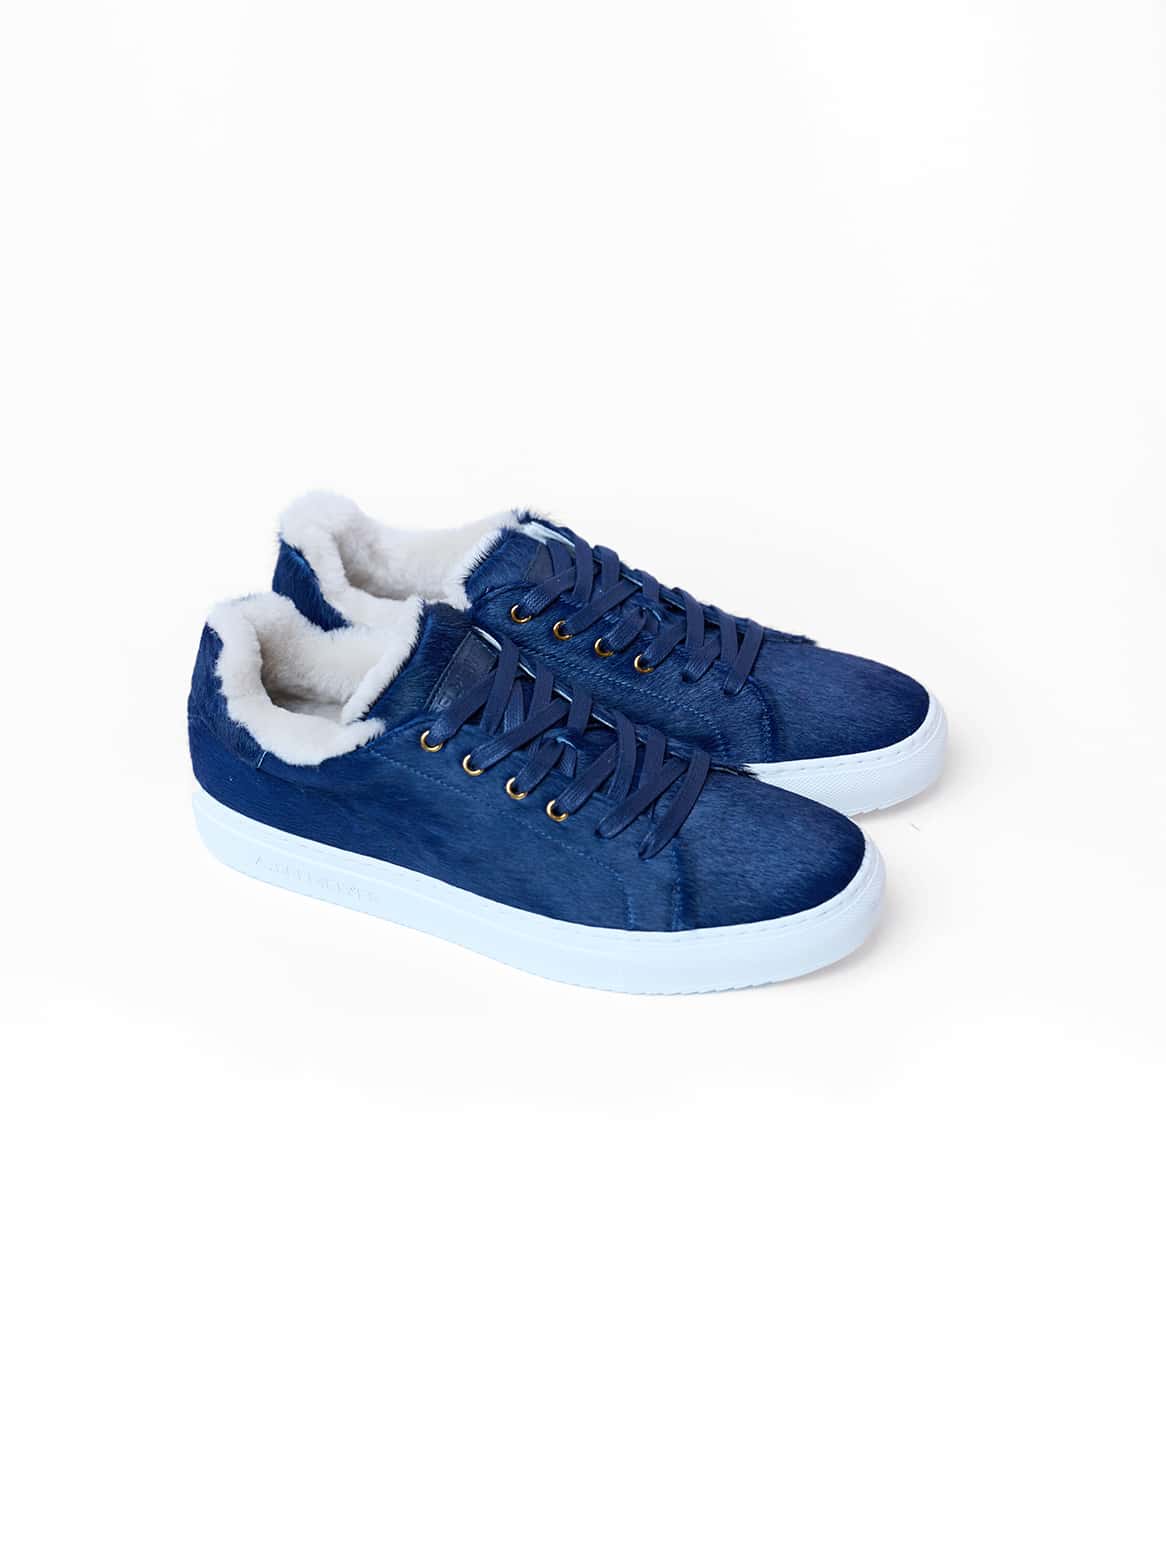 Cavallino Sneaker Blau mit Lammfellfutter